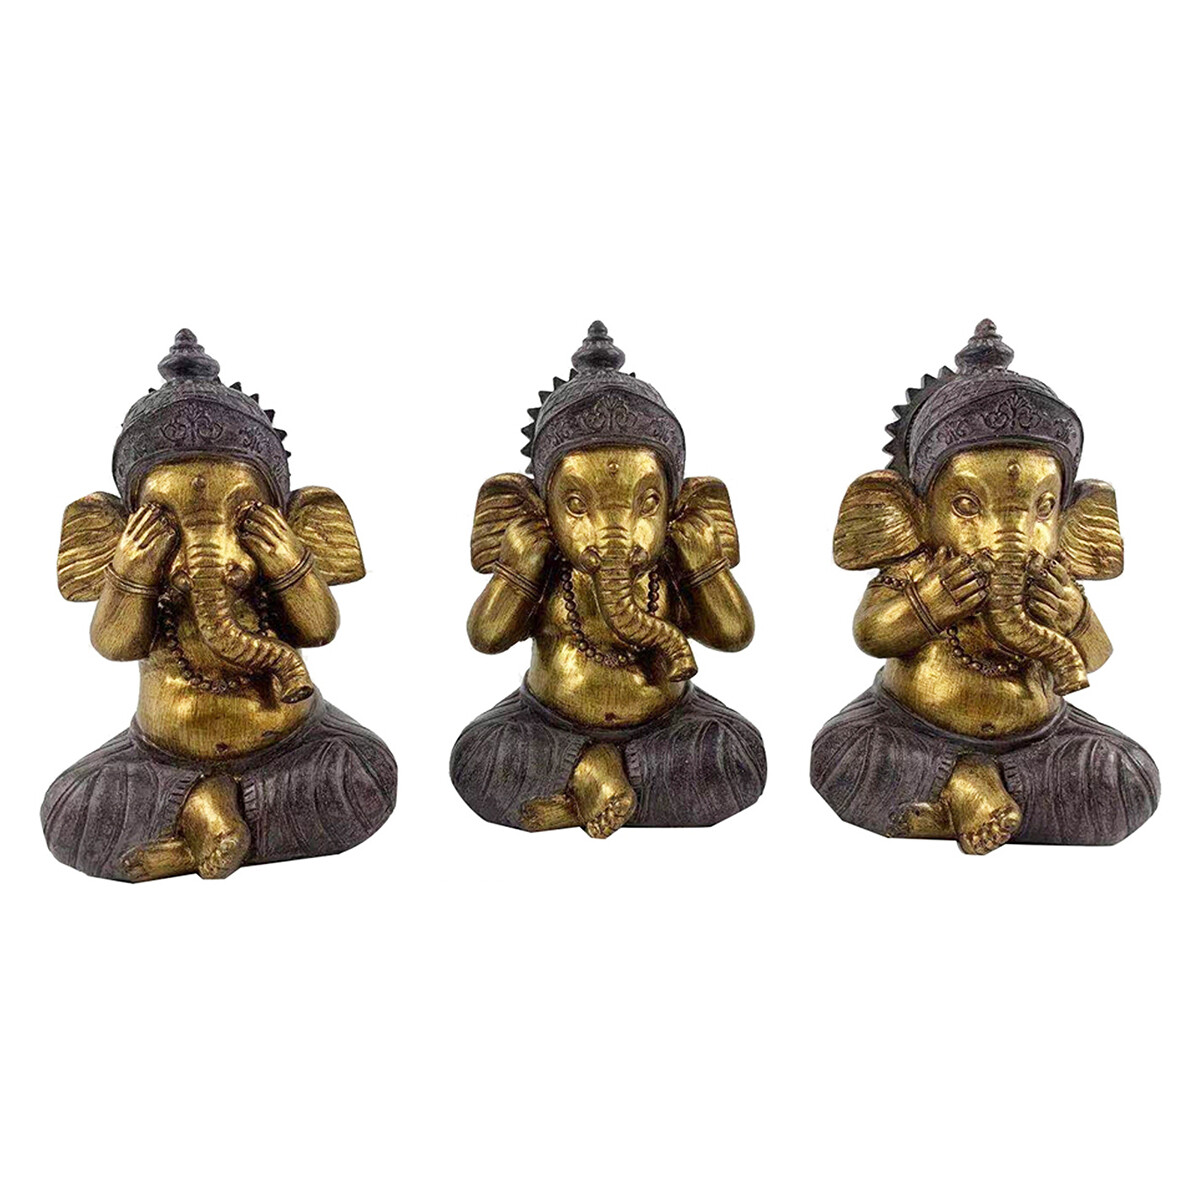 Dom Kipci in figurice Signes Grimalt Slika Ganesha 3 Enote Pozlačena